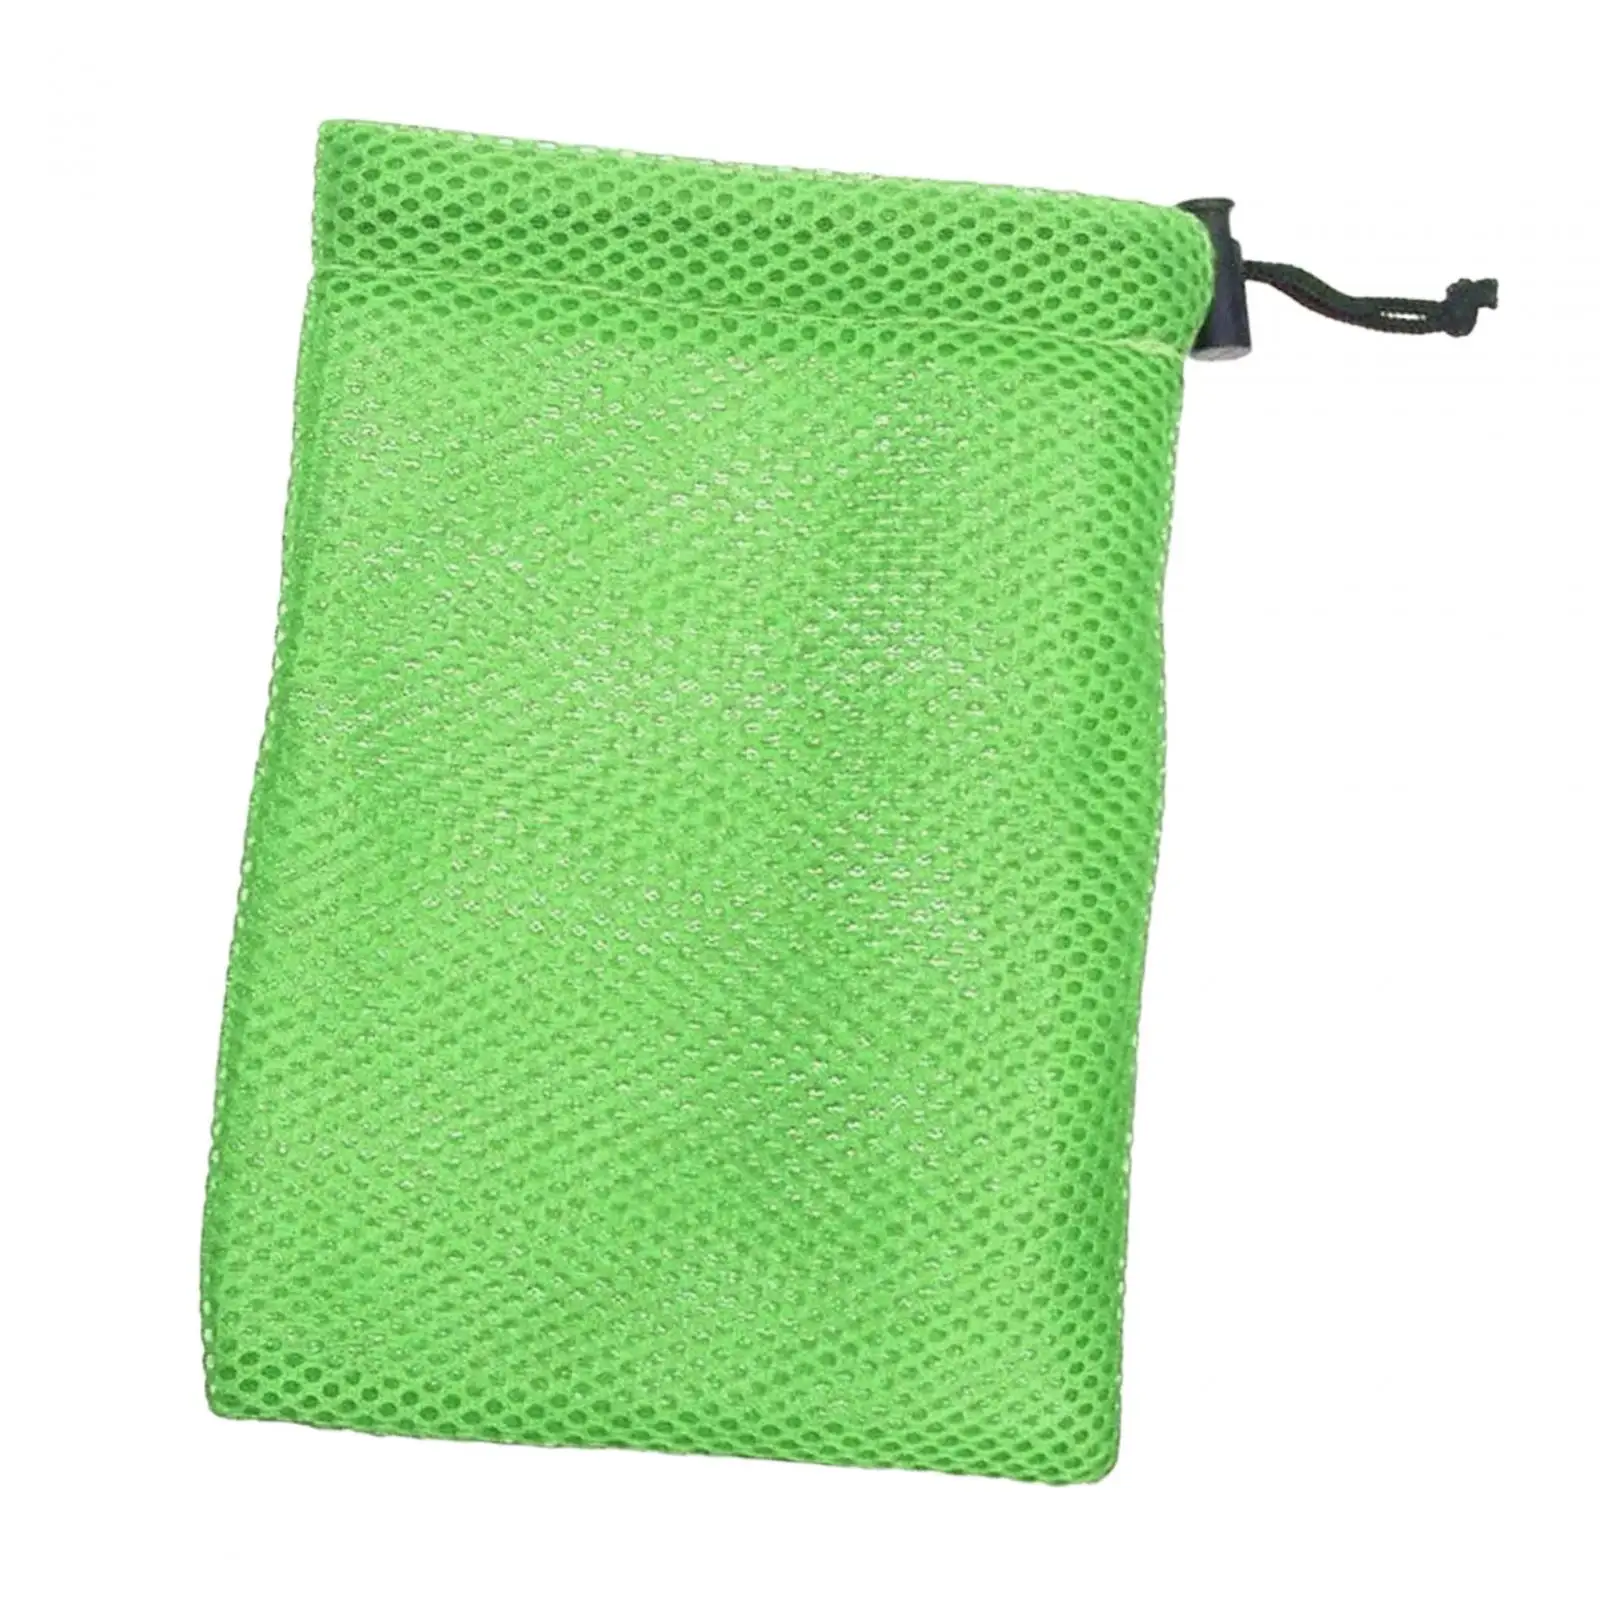 Small Mesh Drawstring Bag Gadgets Organizer Lightweight Multipurpose Storage Pouch for Tennis Balls Cosmetics Beach Toys Camping